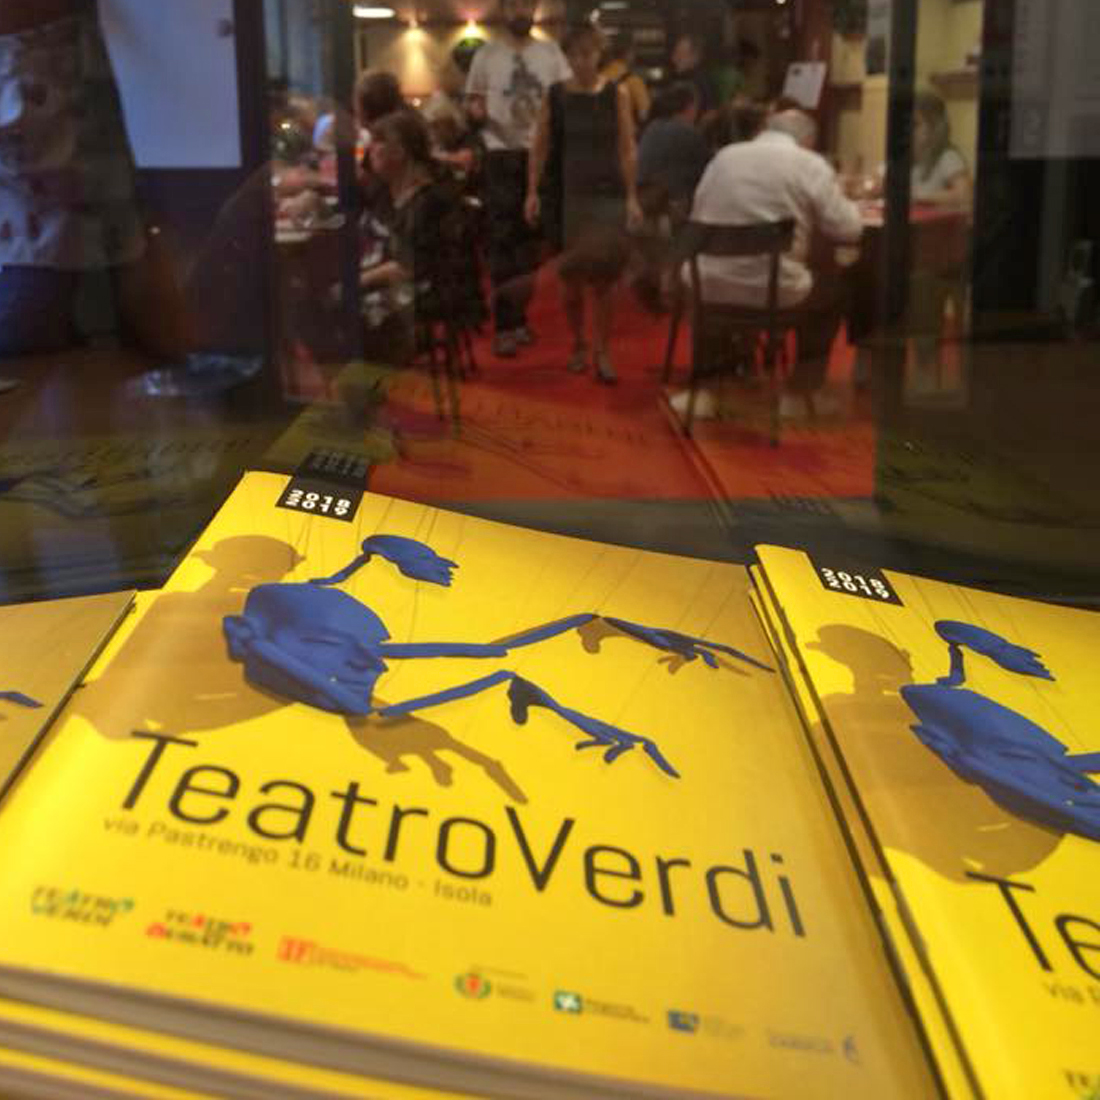 Immagine Teatro Verdi stagione 2018-2019